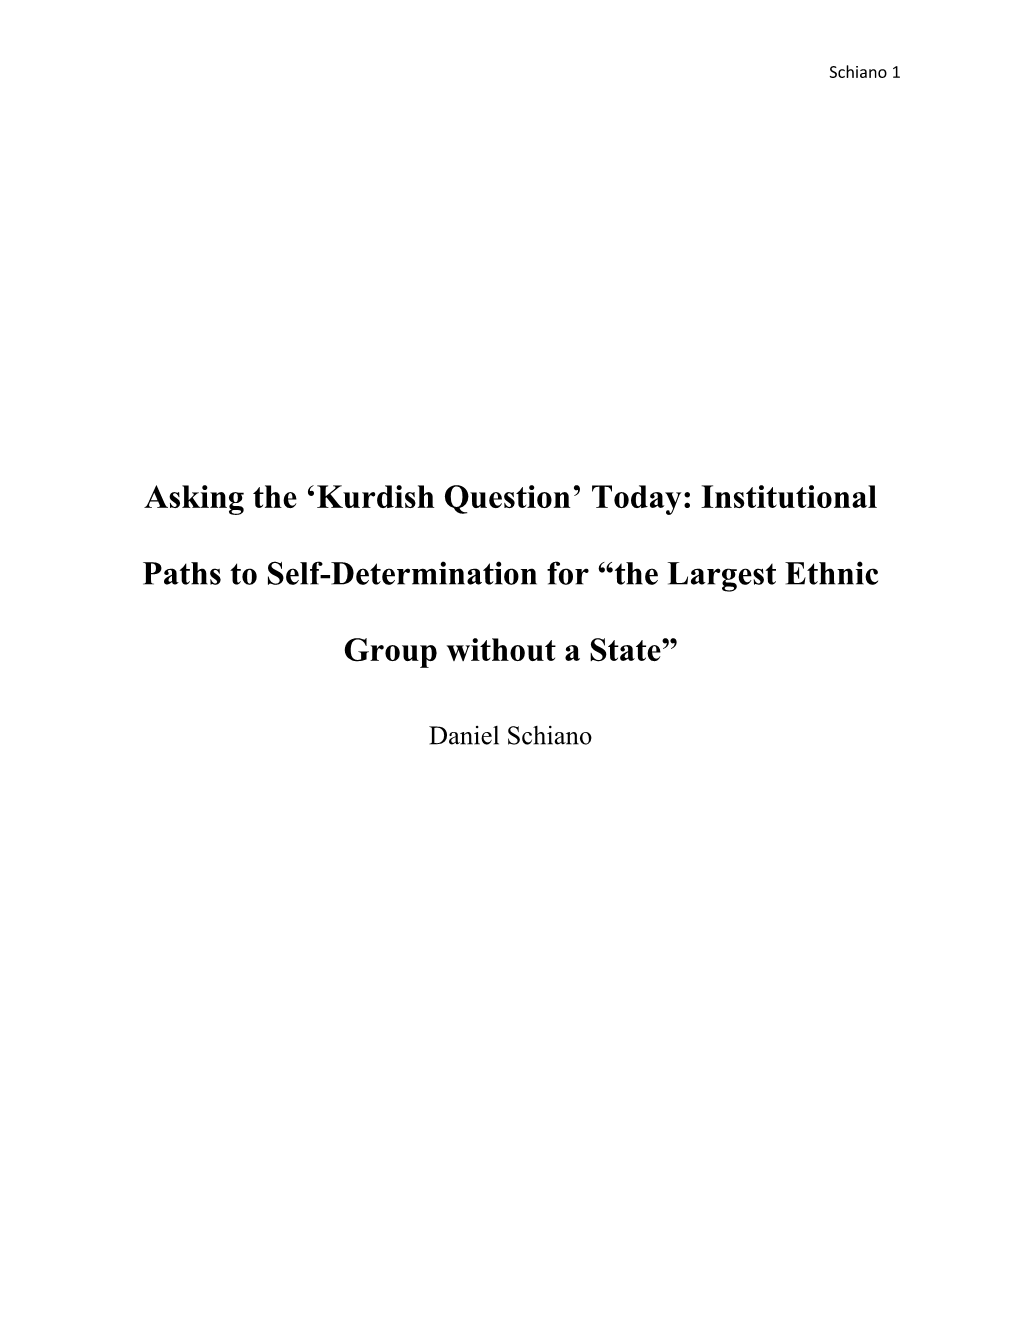 Kurdish Question’ Today: Institutional